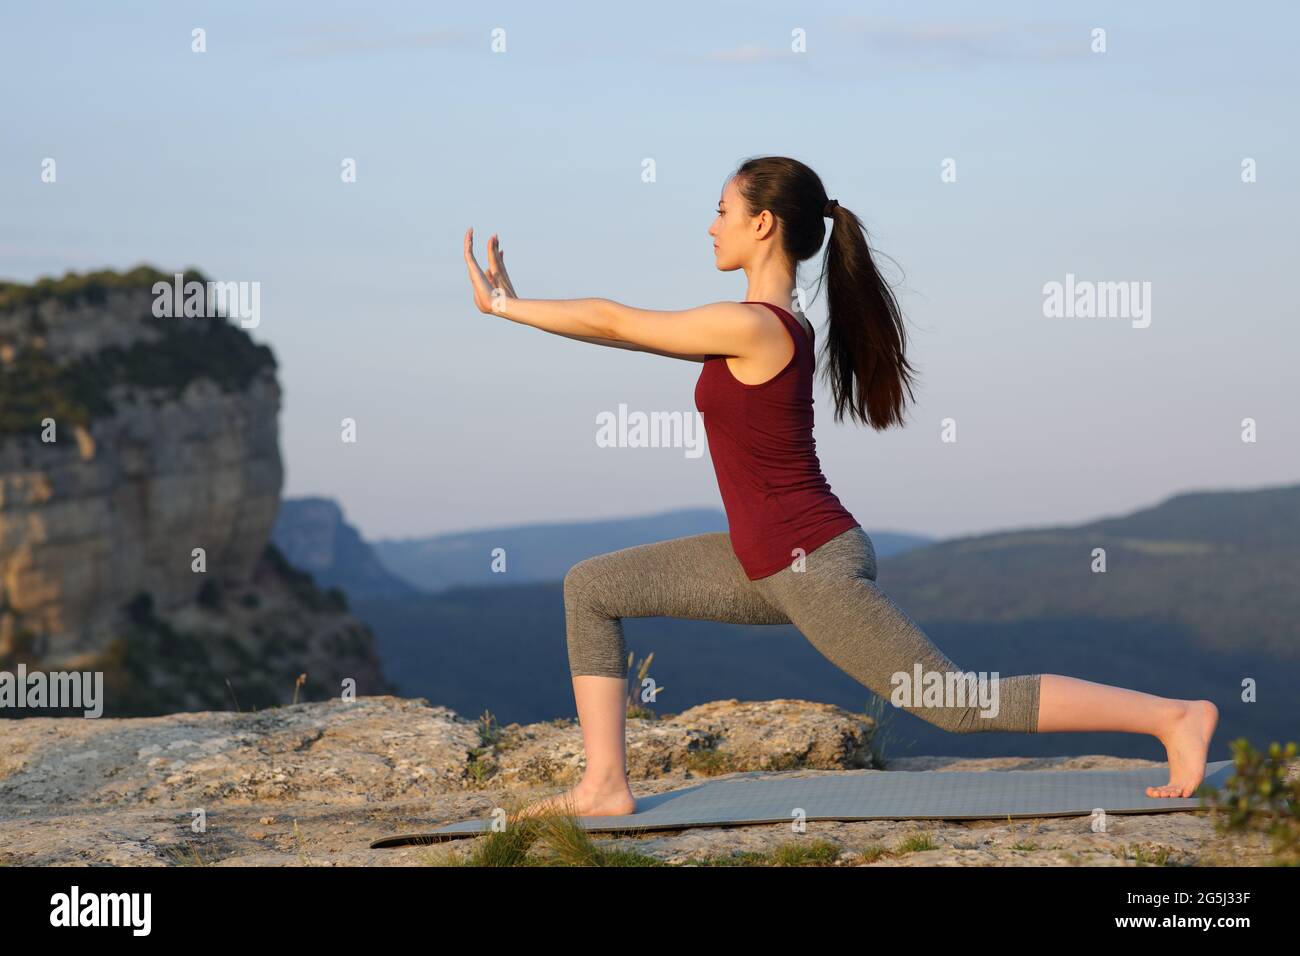 Tai Chi Qigong Yoga High Resolution Stock Photography And Images Alamy